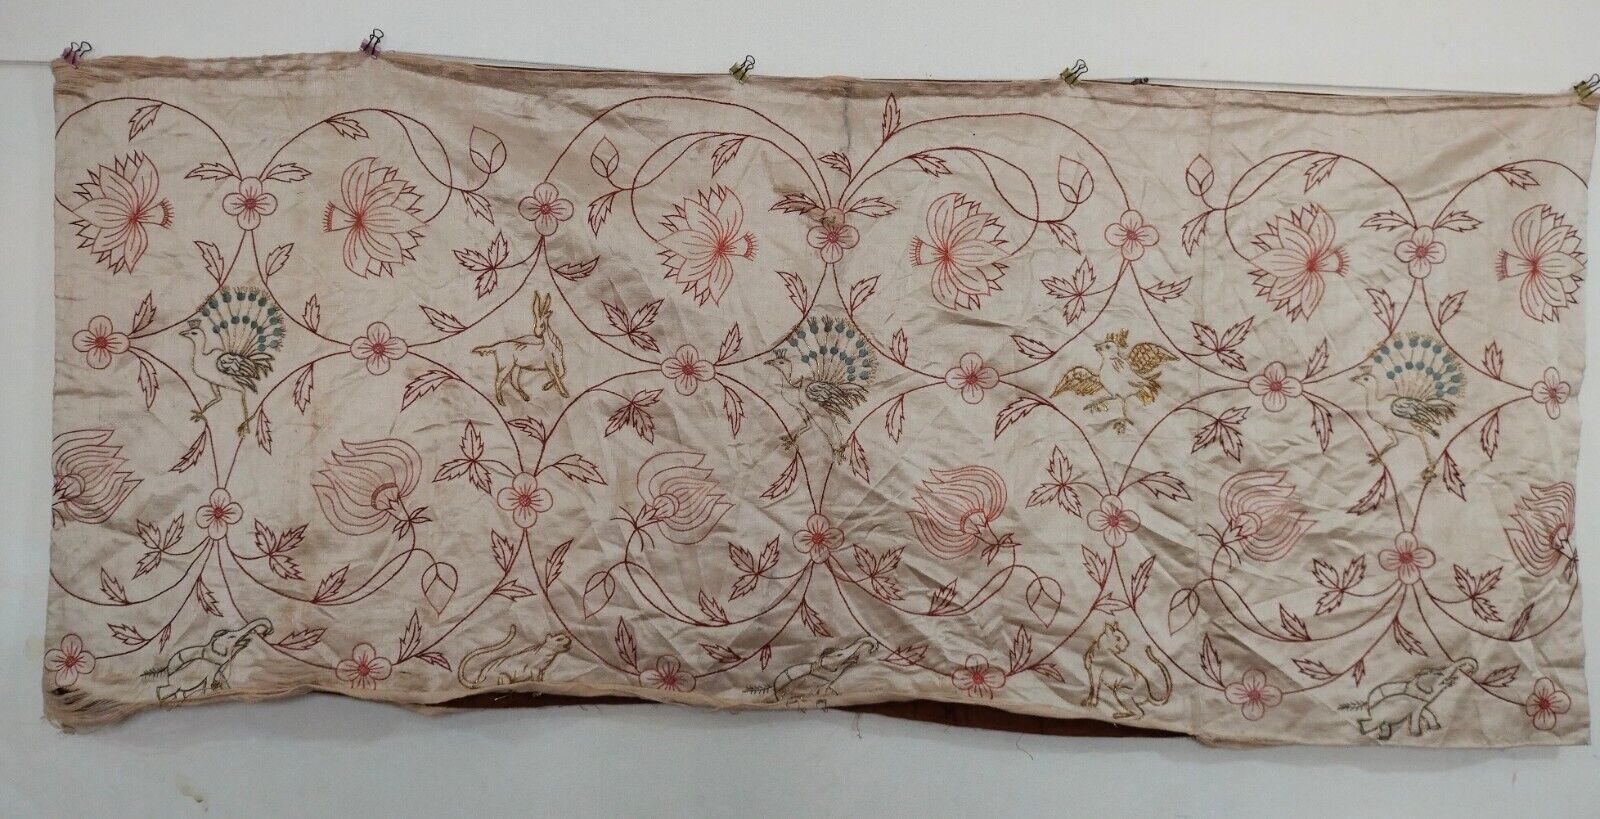 antique French silk & metallic embroidery textile fabric needlework panel itm919